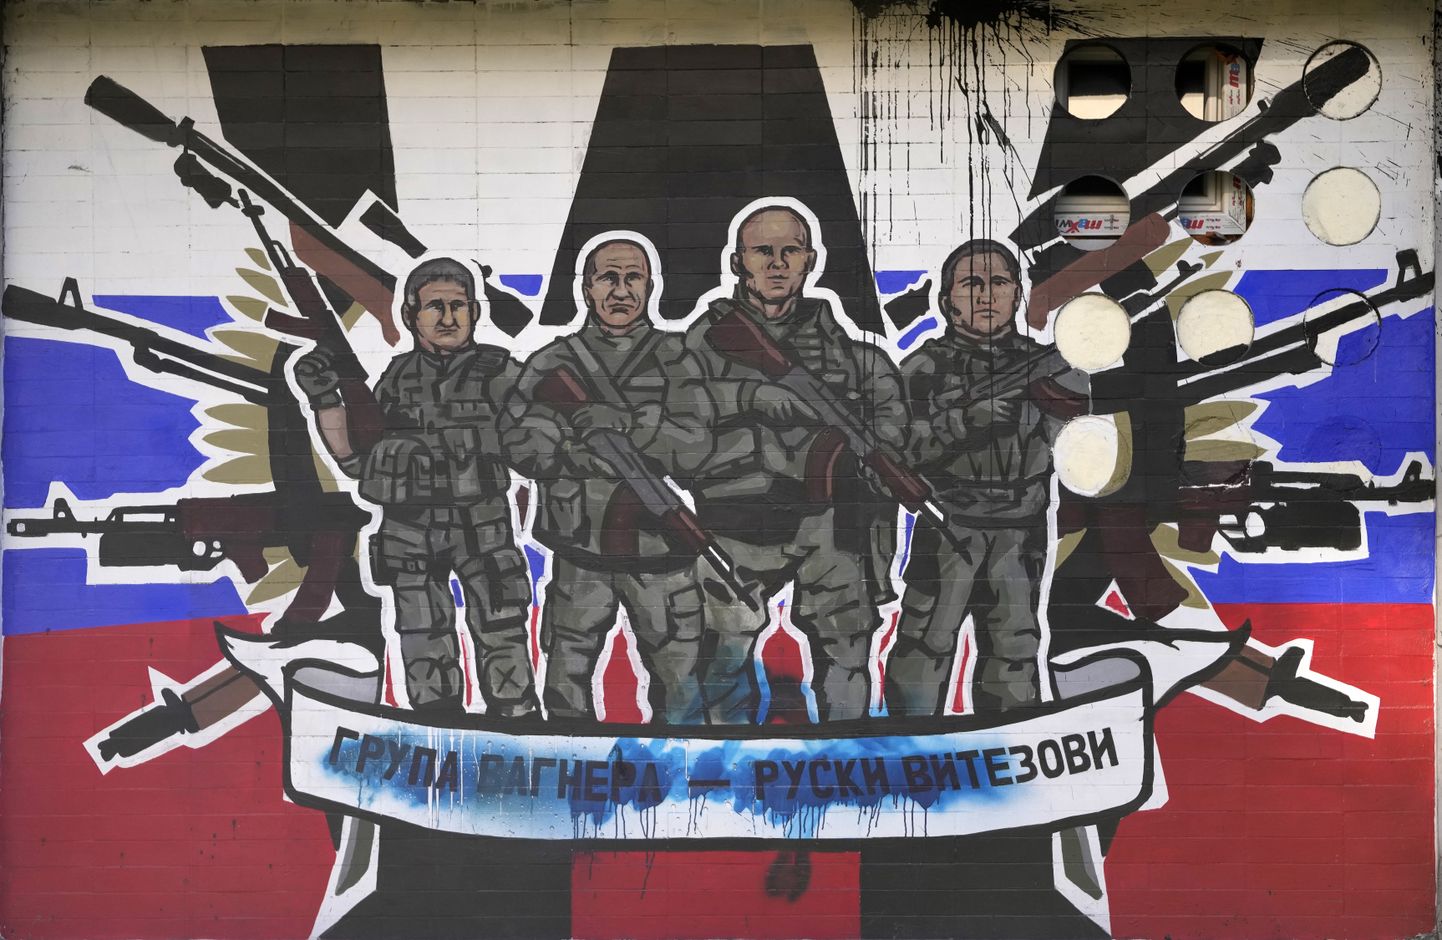 Vene erasõjafirmat Wagneri gruppi ülistav grafiti Serbia pealinnas Belgradis